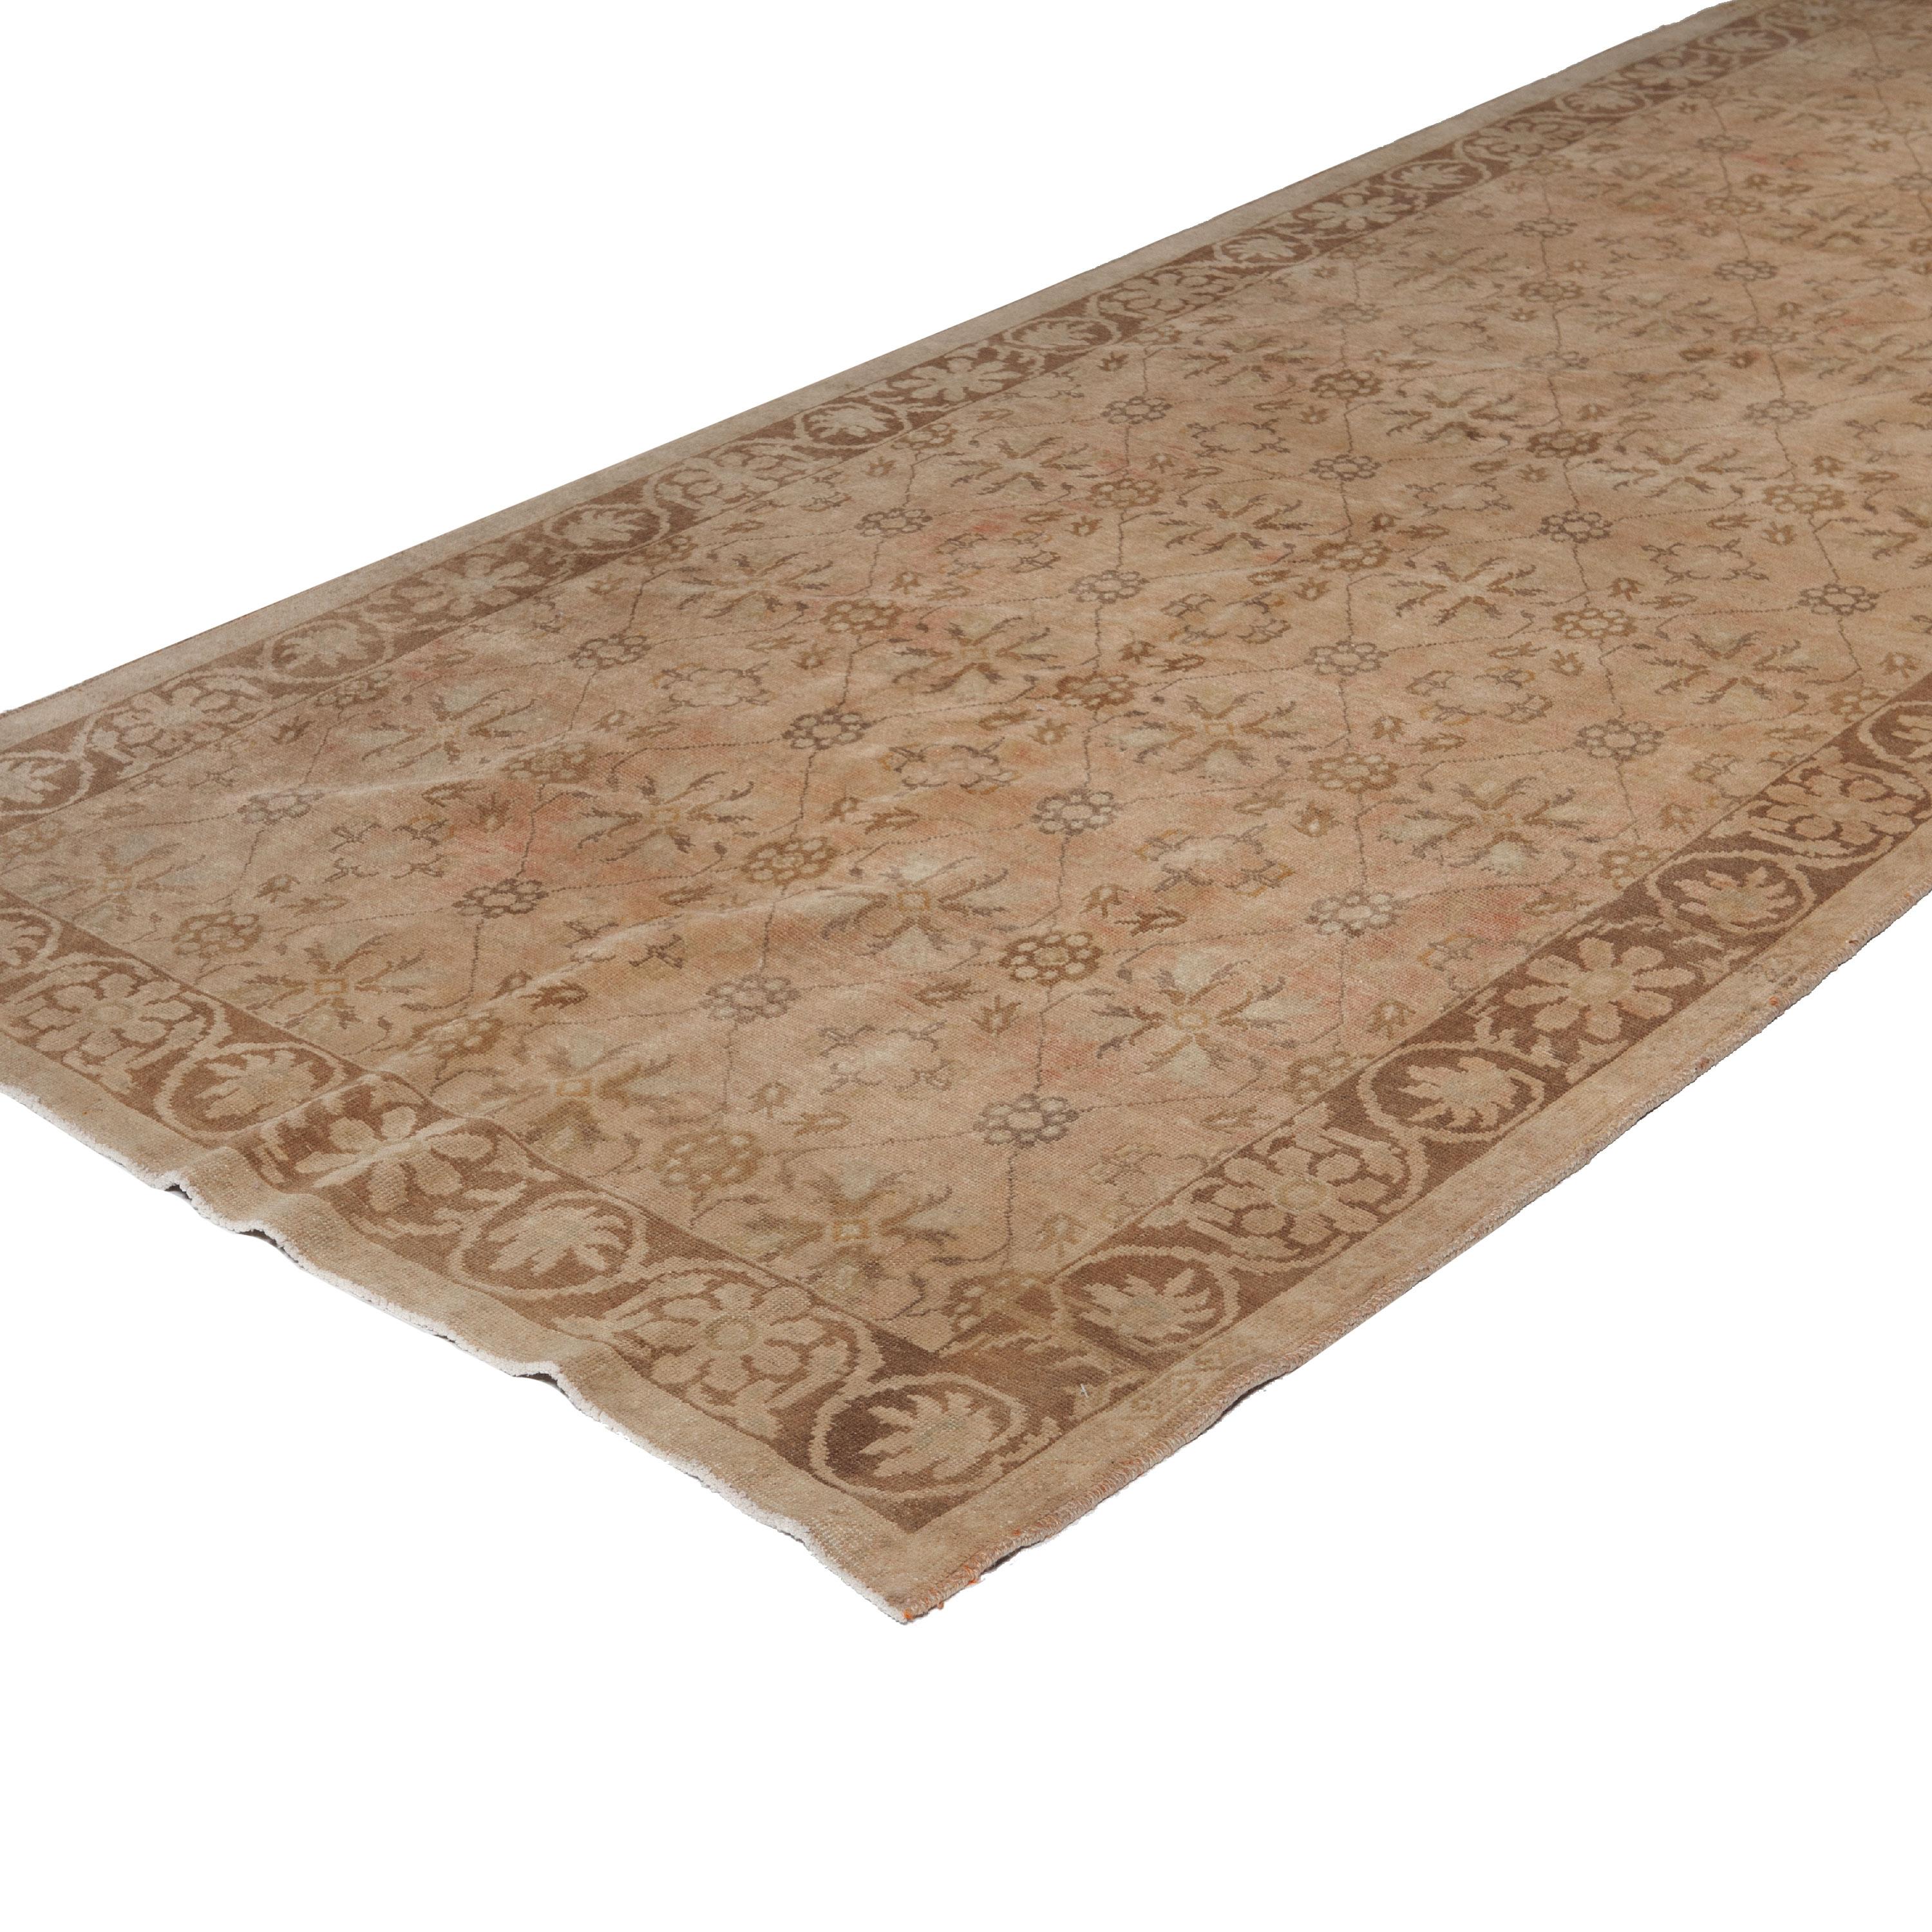 Turkish abc carpet Beige Vintage Traditional Khotan Runner - 4'1